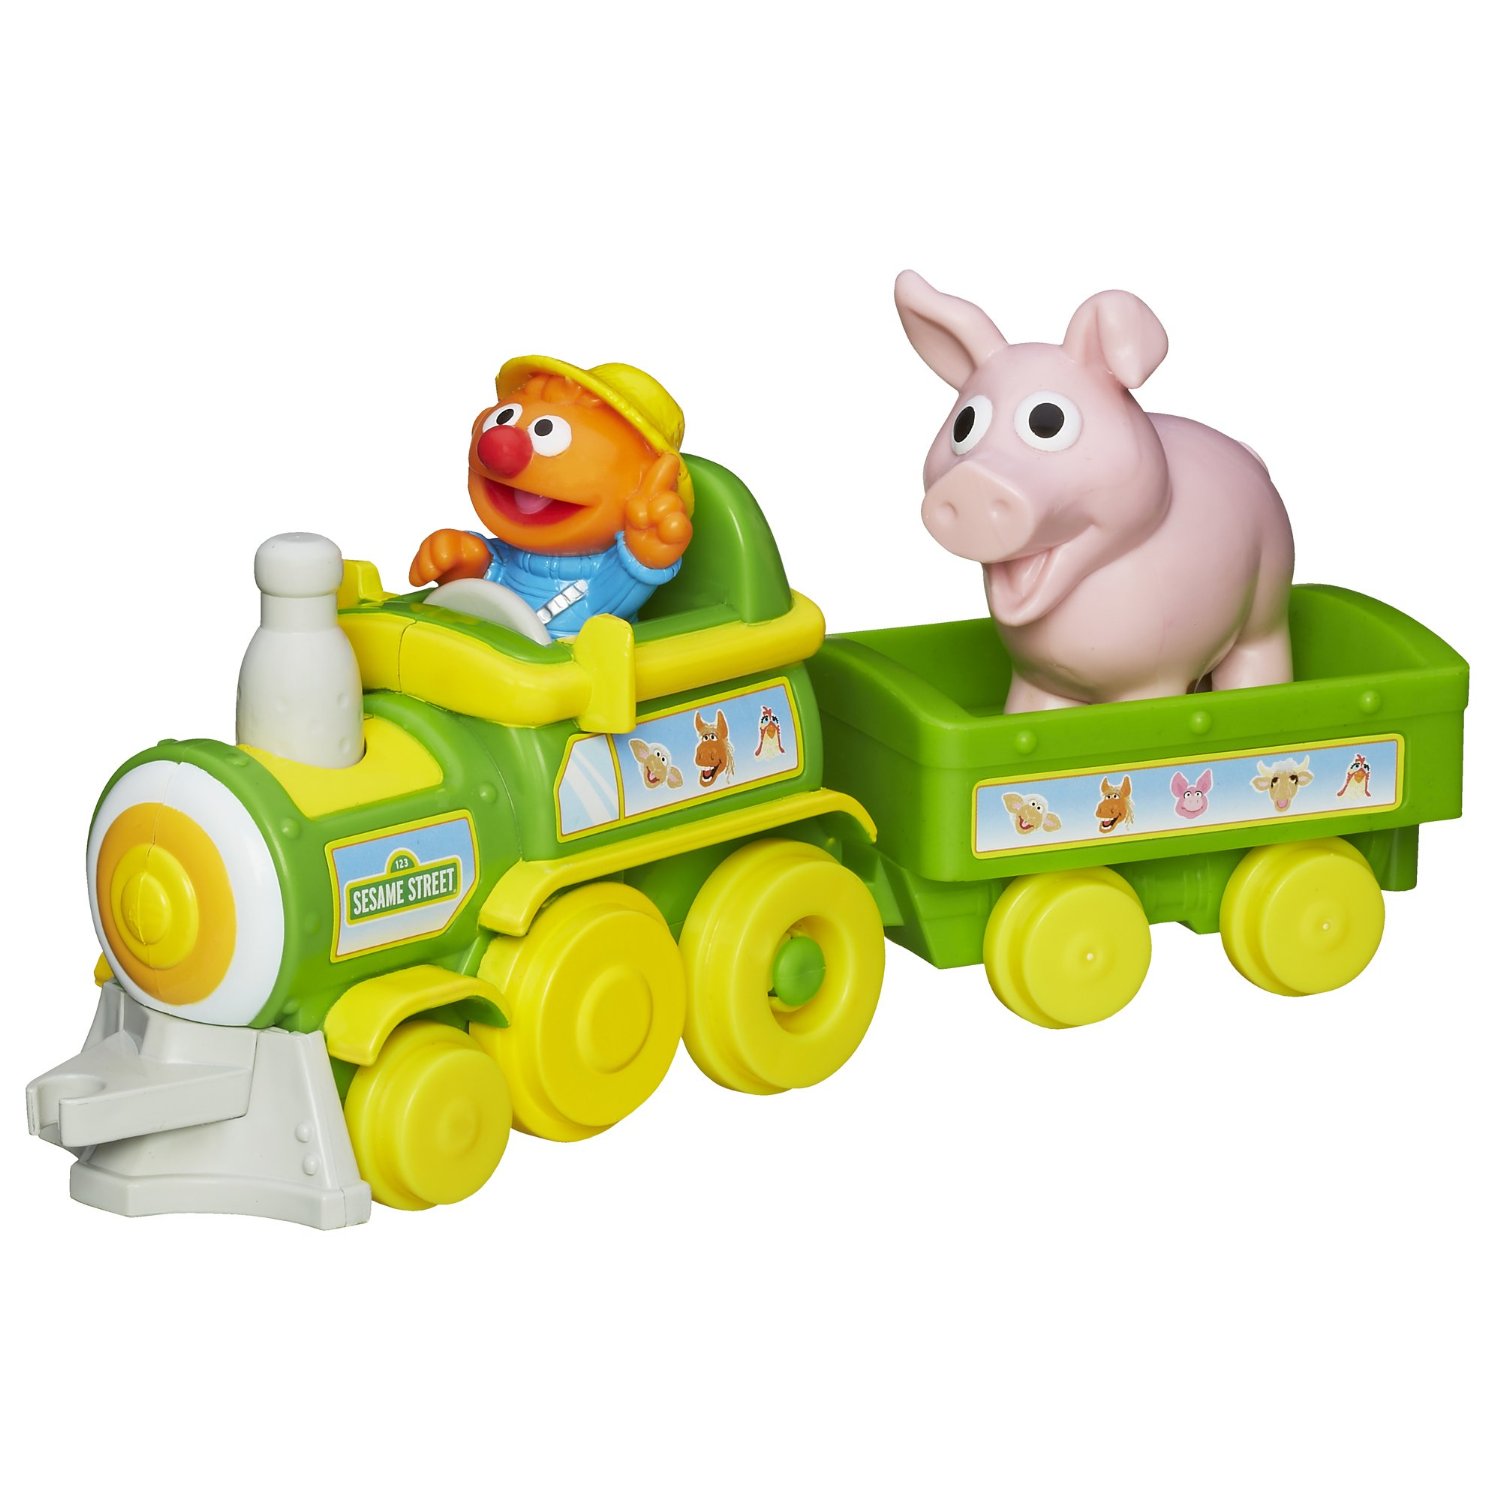 Sesame Street - Play Trains & Railway Sets / Toy ...